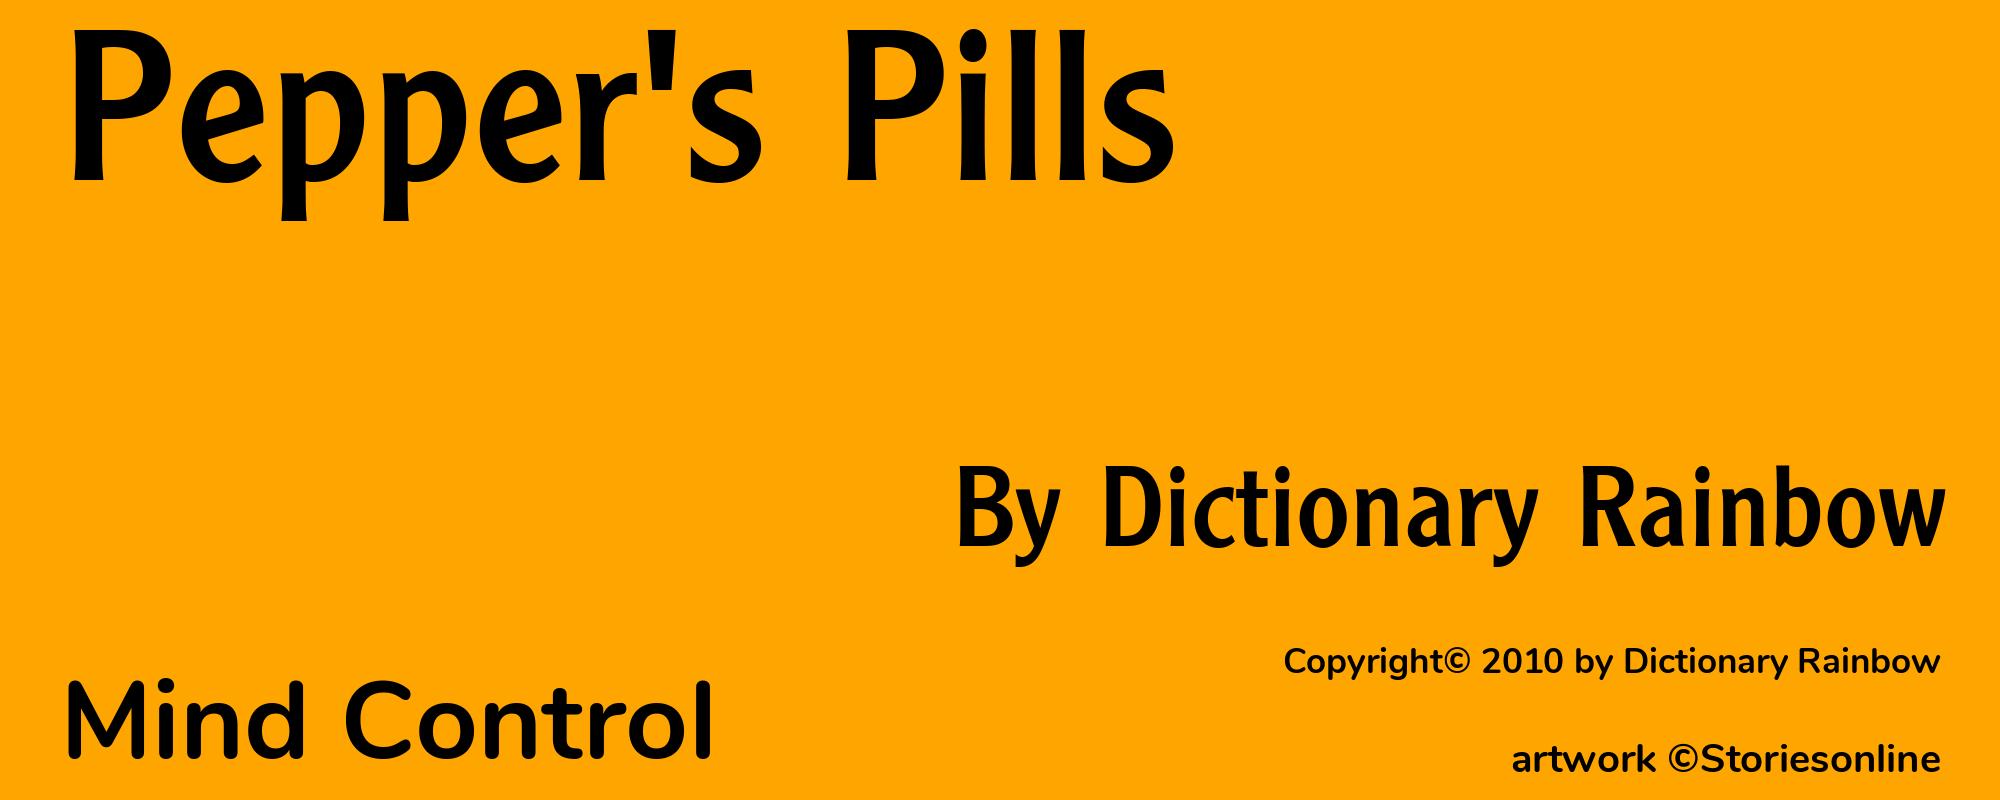 Pepper's Pills - Cover